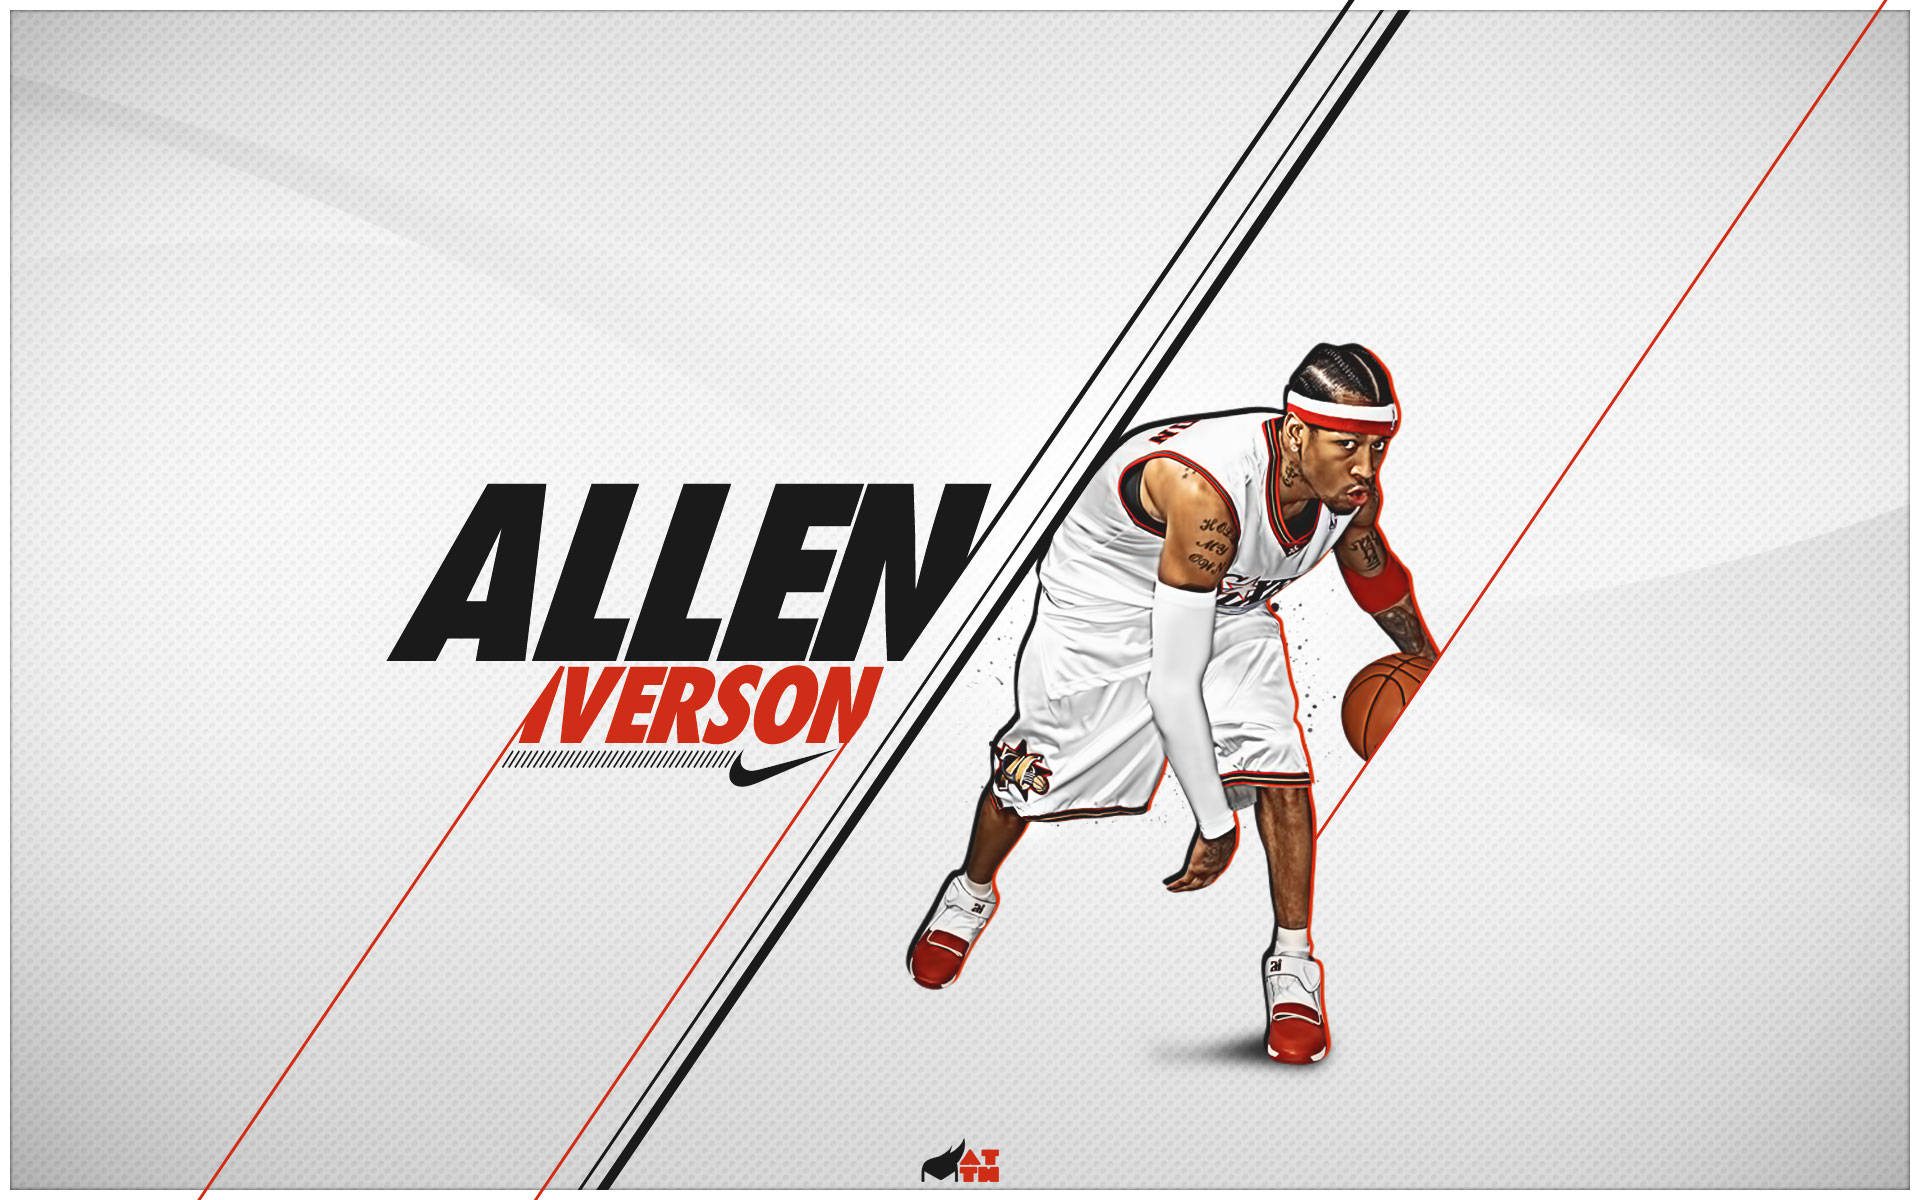 Allen Iverson Modern Sports White Backdrop Background